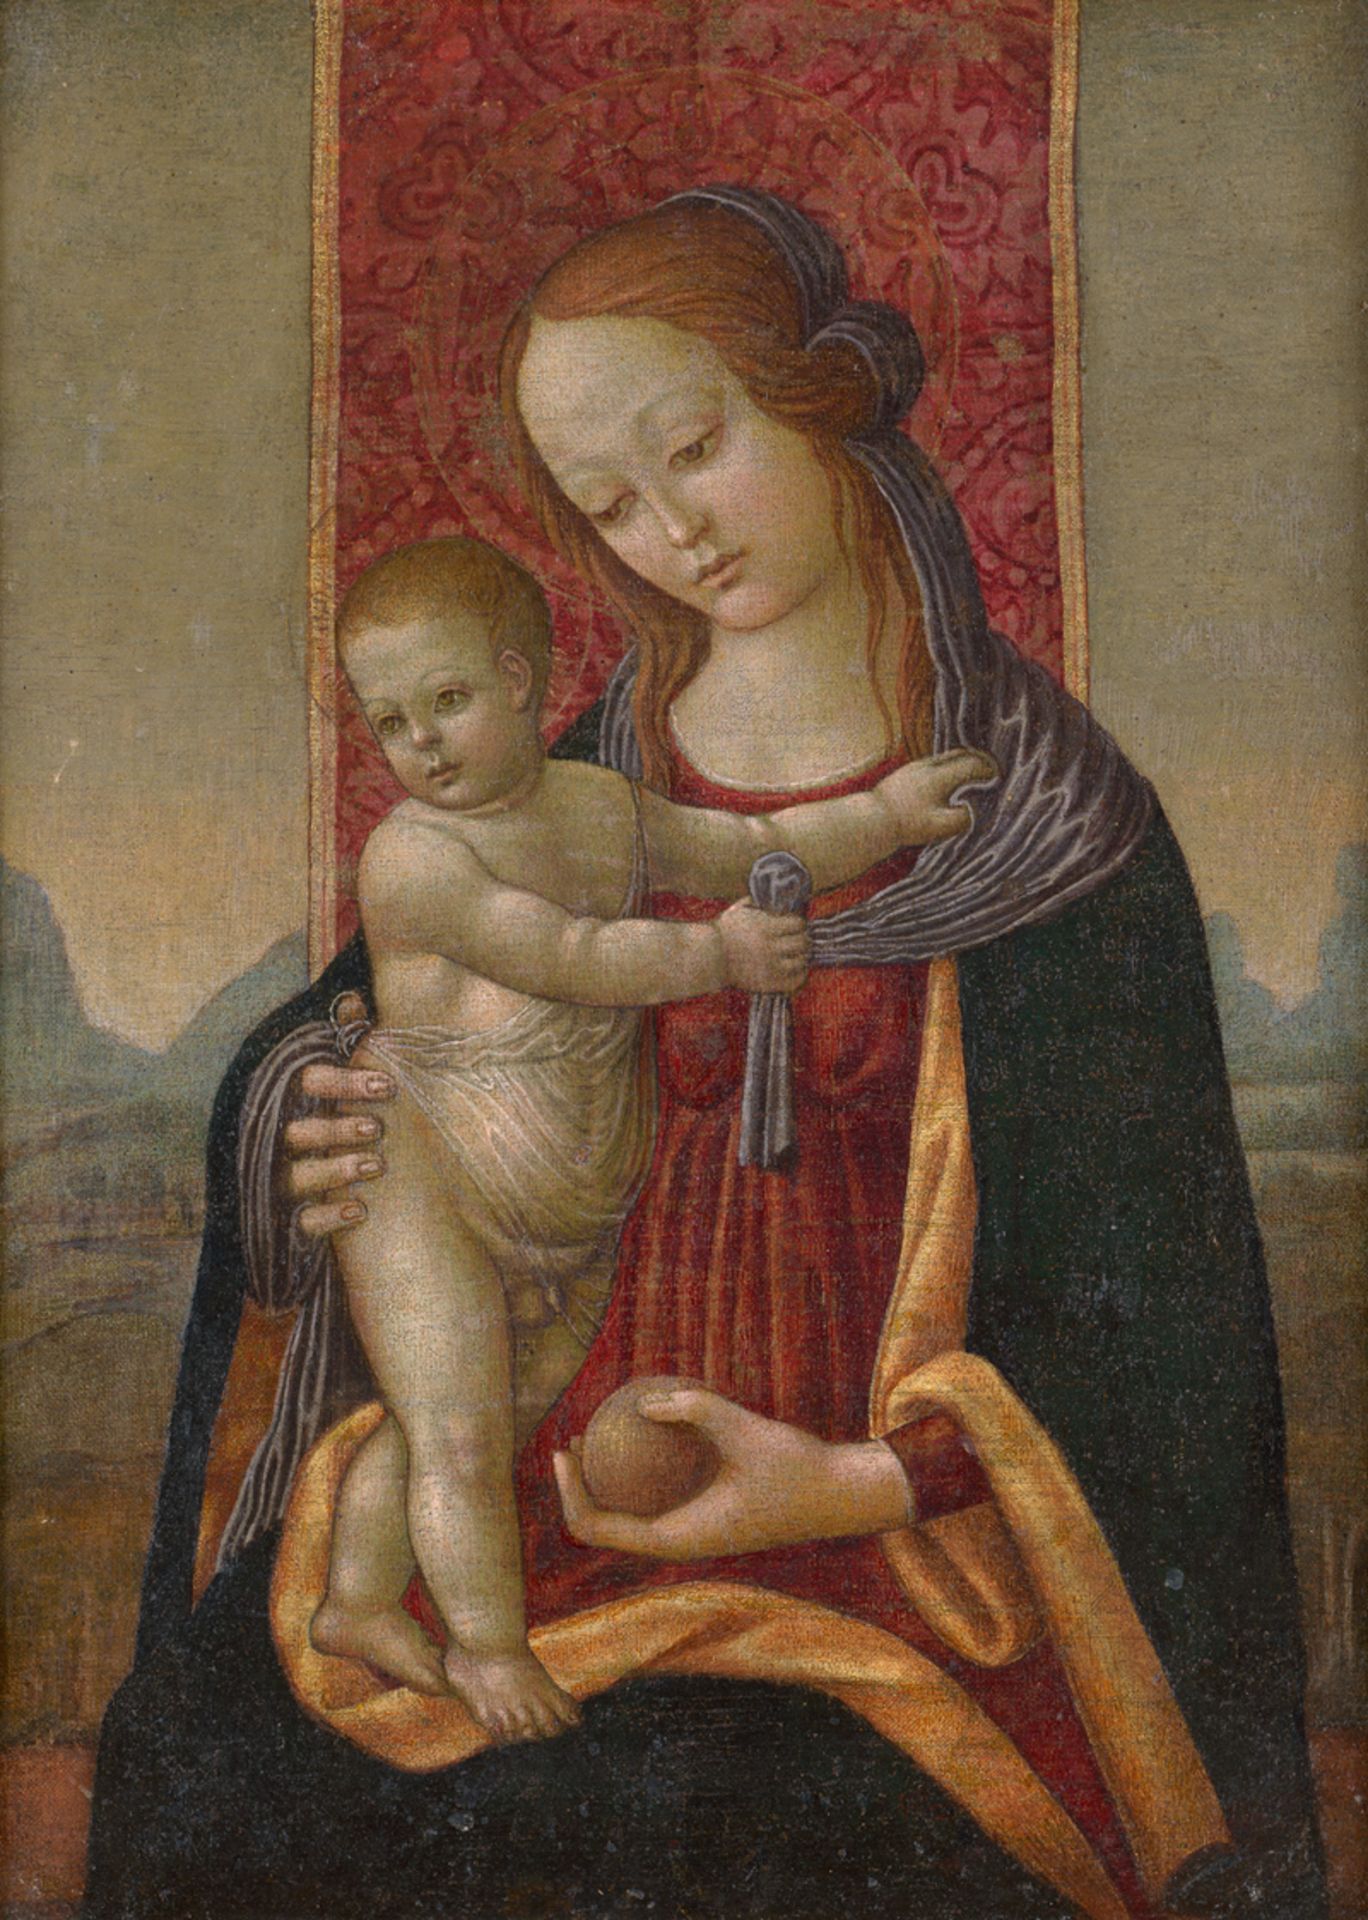 Sellaio, Arcangelo di Jacopo del - ...: Madonna mit Kind und Apfel